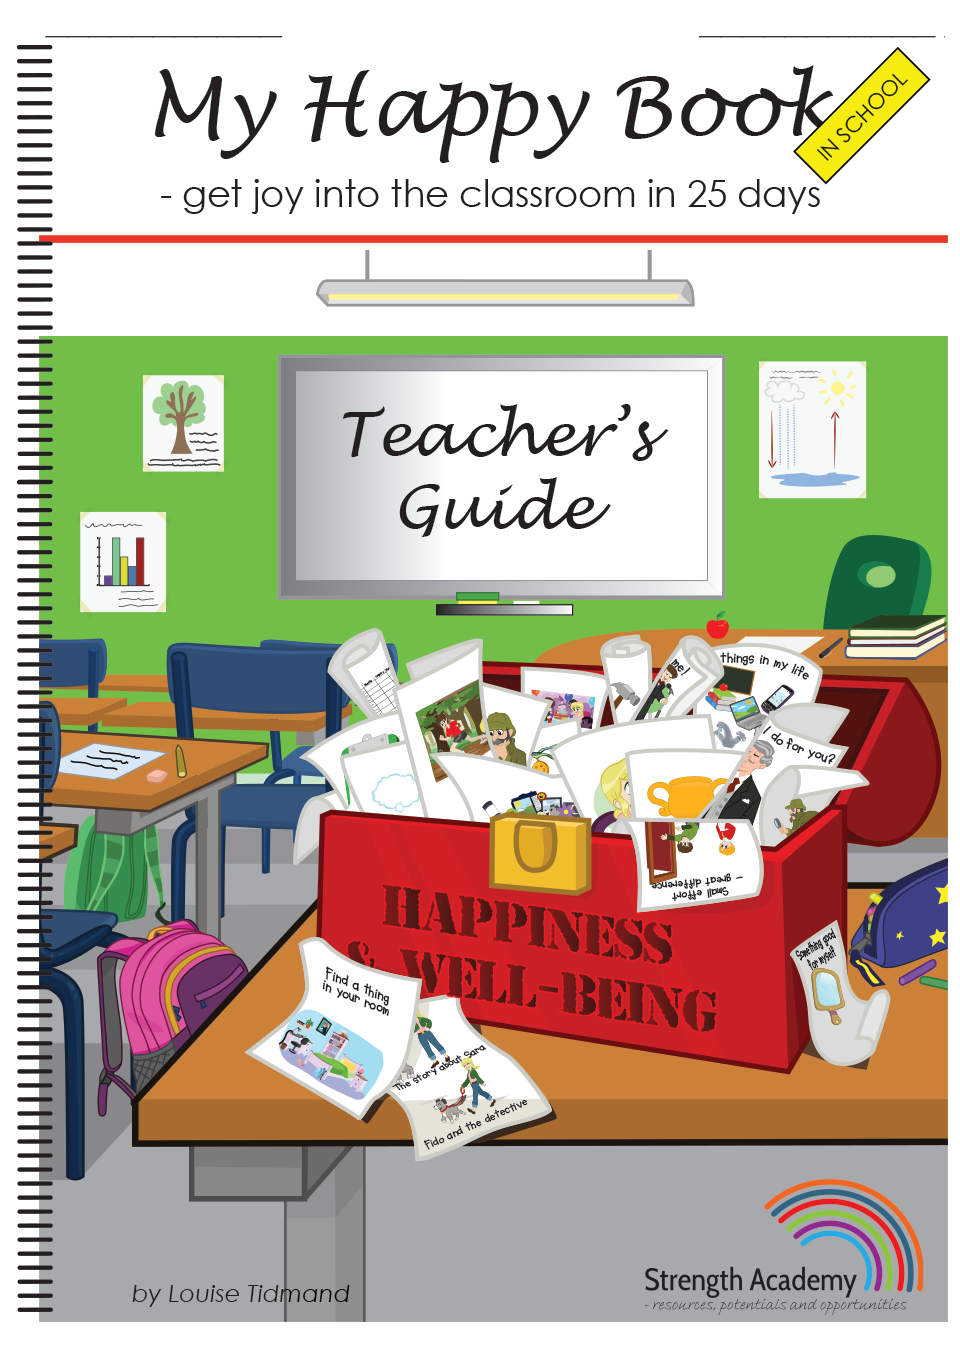 My Happy Book in School - get joy into the classroom in 25 days, teacher's guide